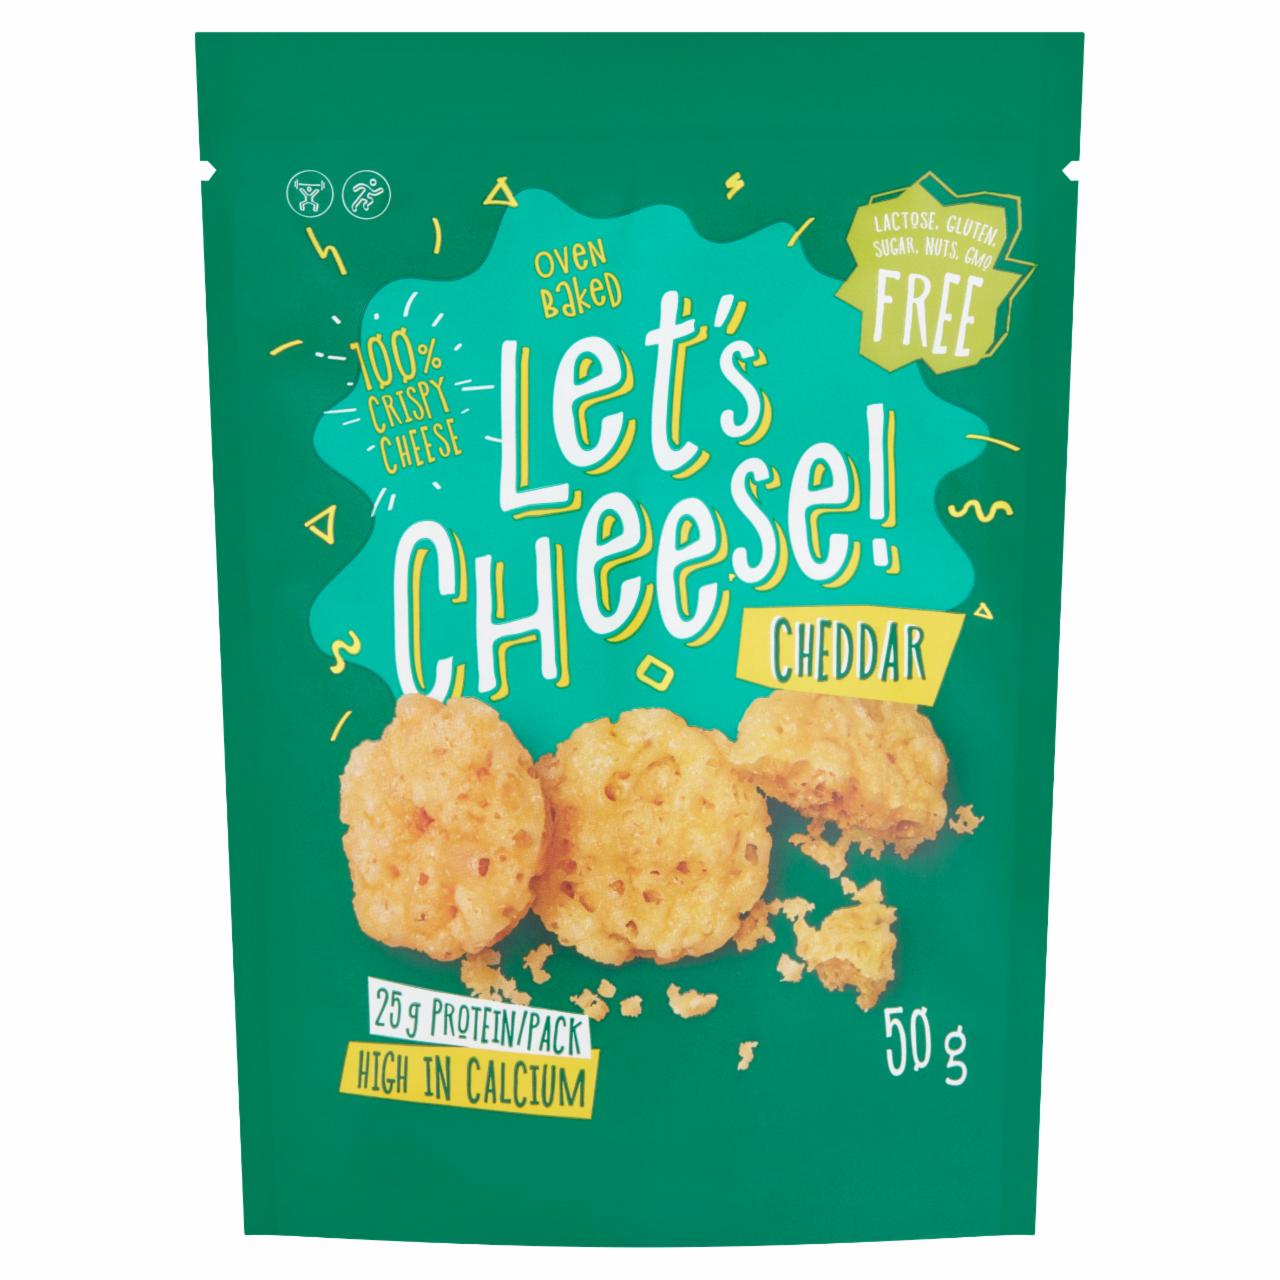 Képek - Let's Cheese! ropogós, sült cheddar sajt snack 50 g